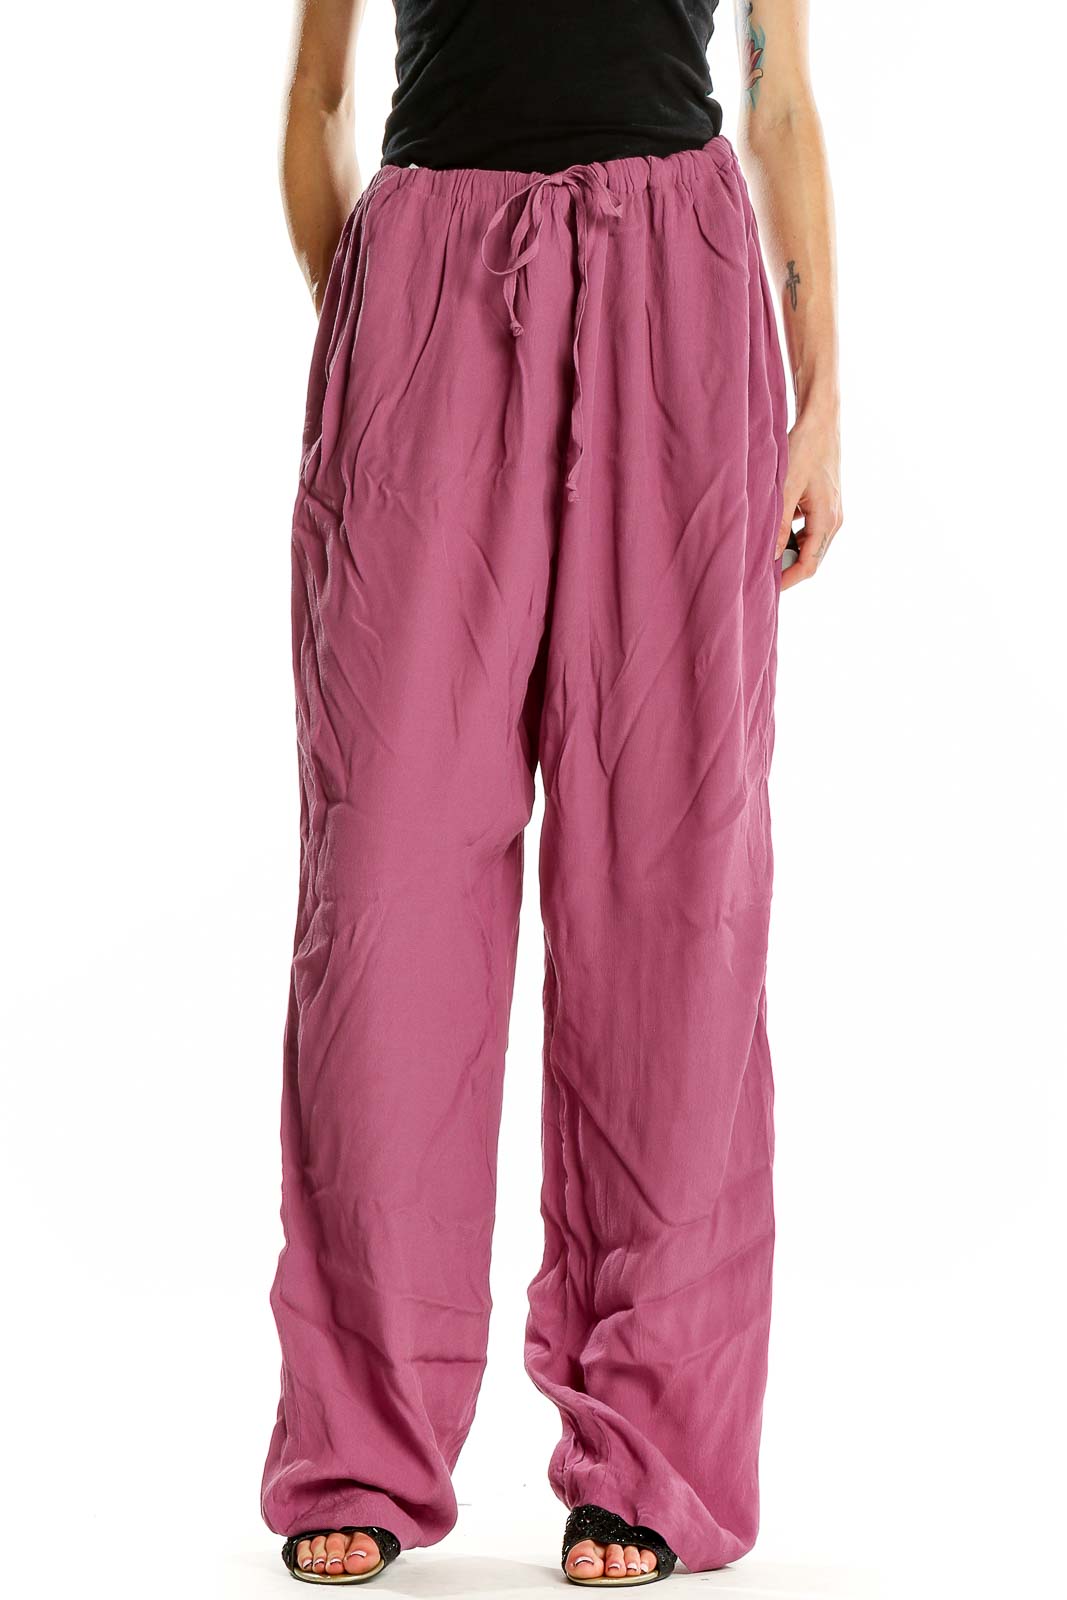 Pink Drawstring Pants Front